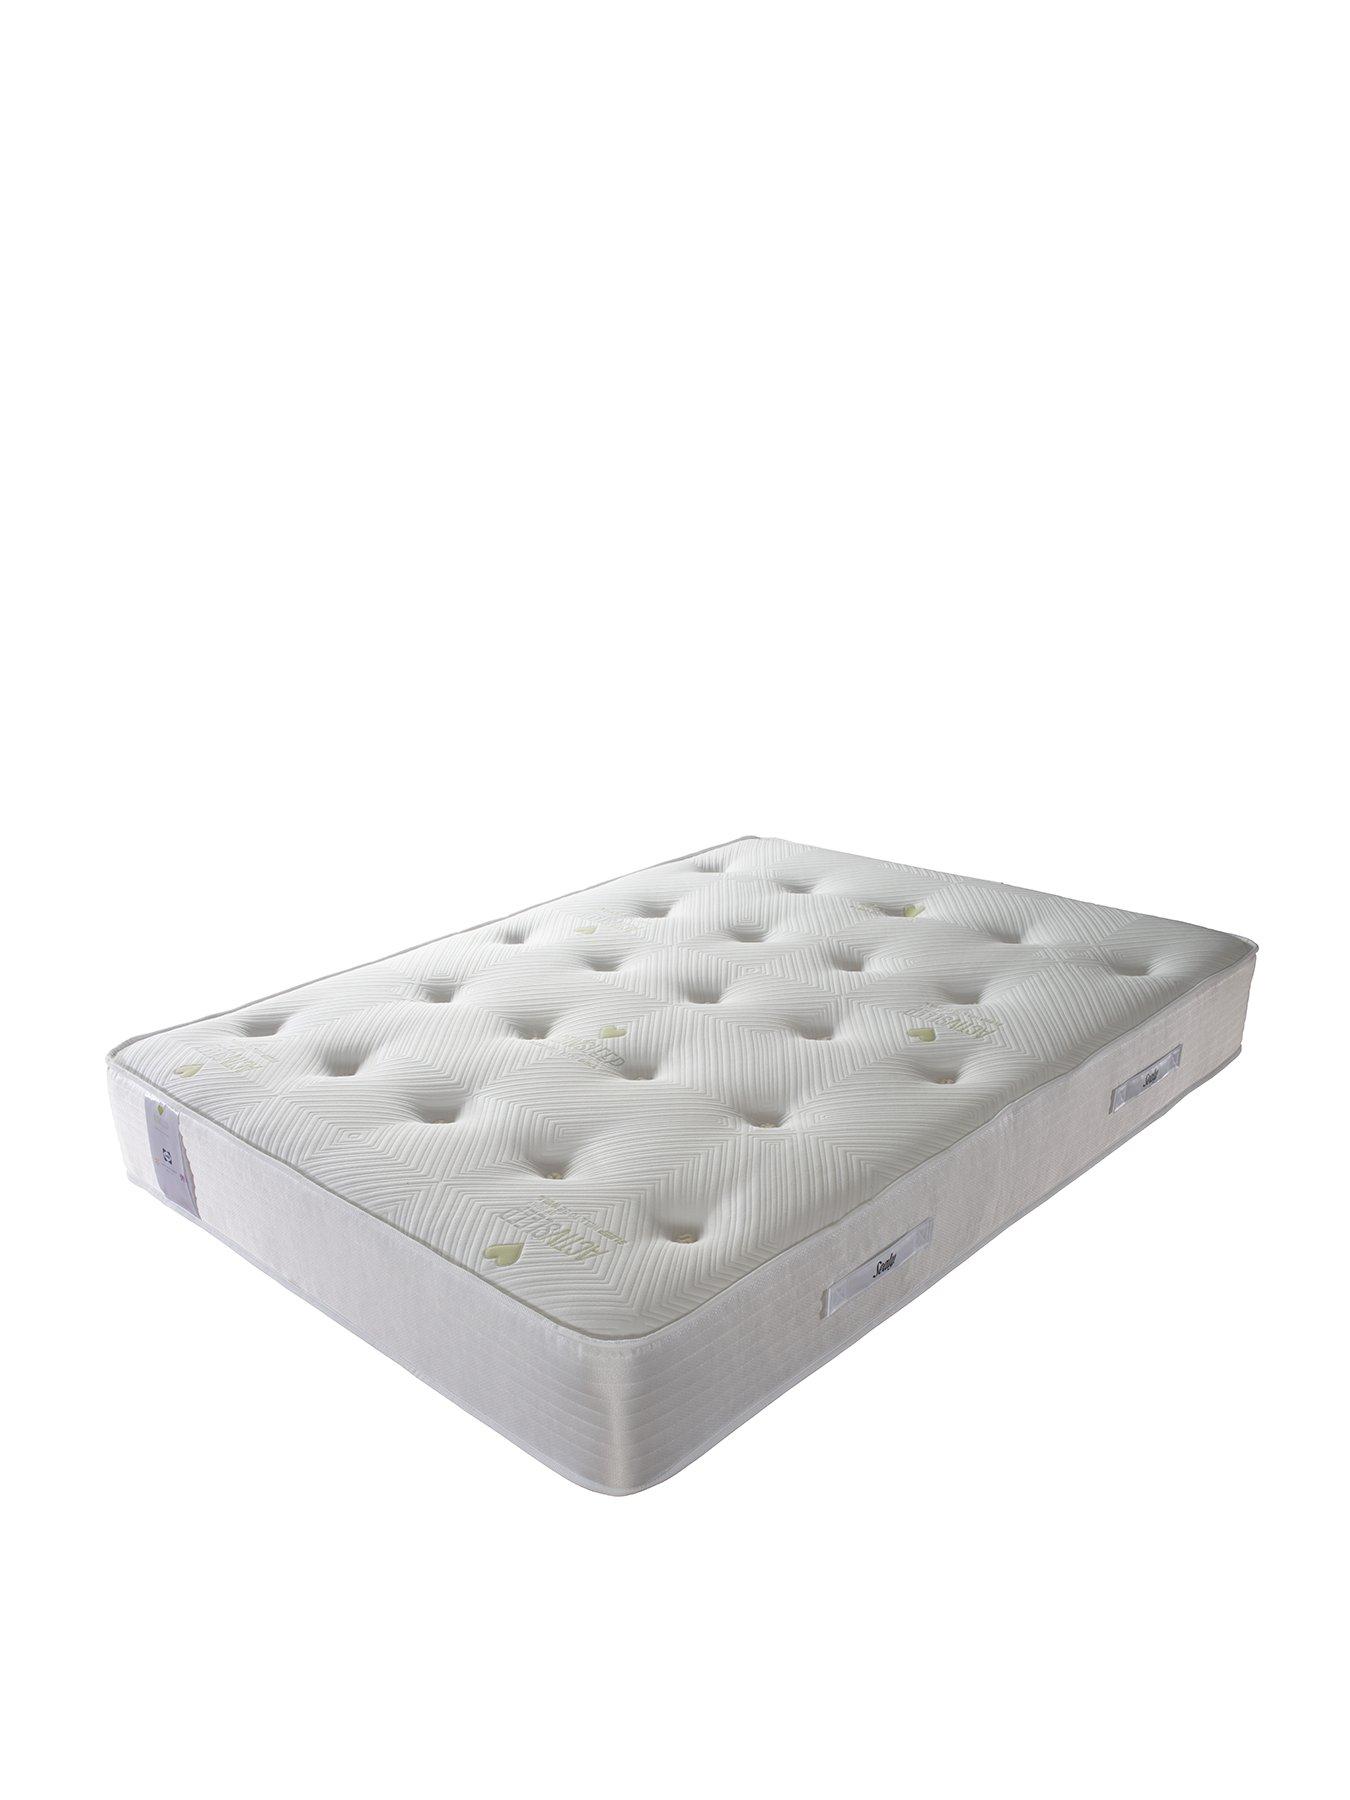 babystyle dream sprung cot bed mattress